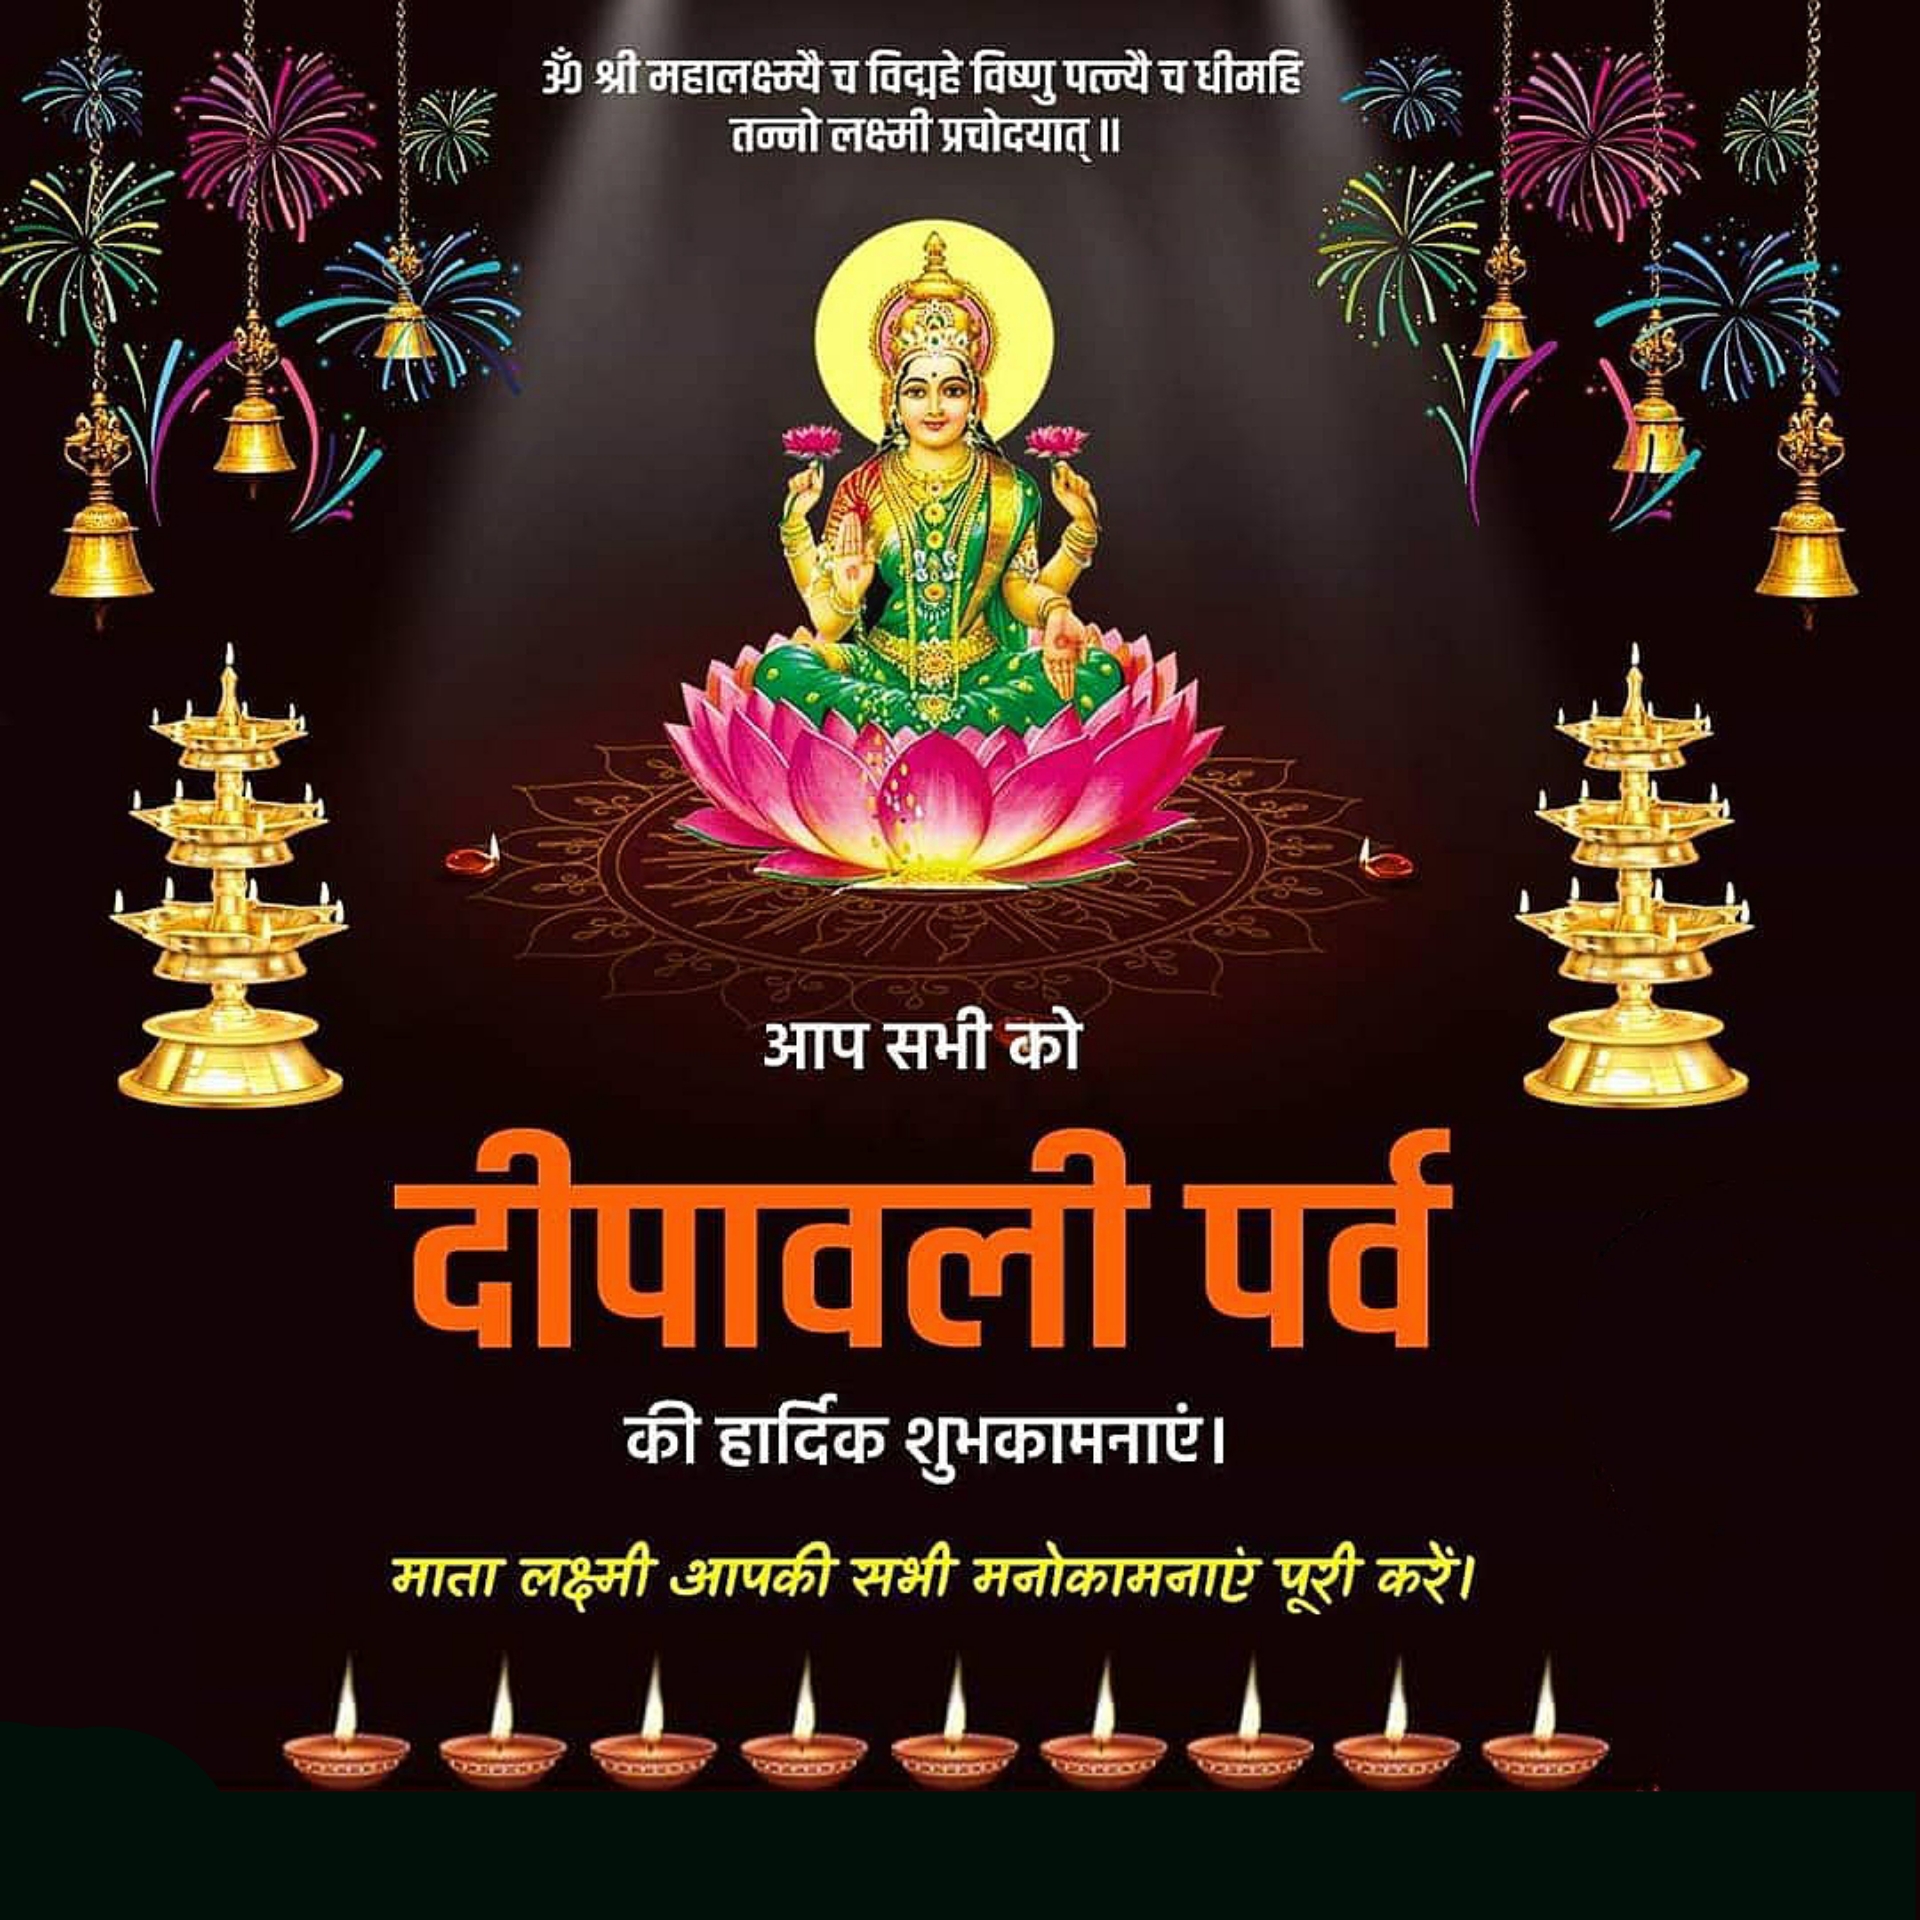 Hindi Diwali images For WhatsApp